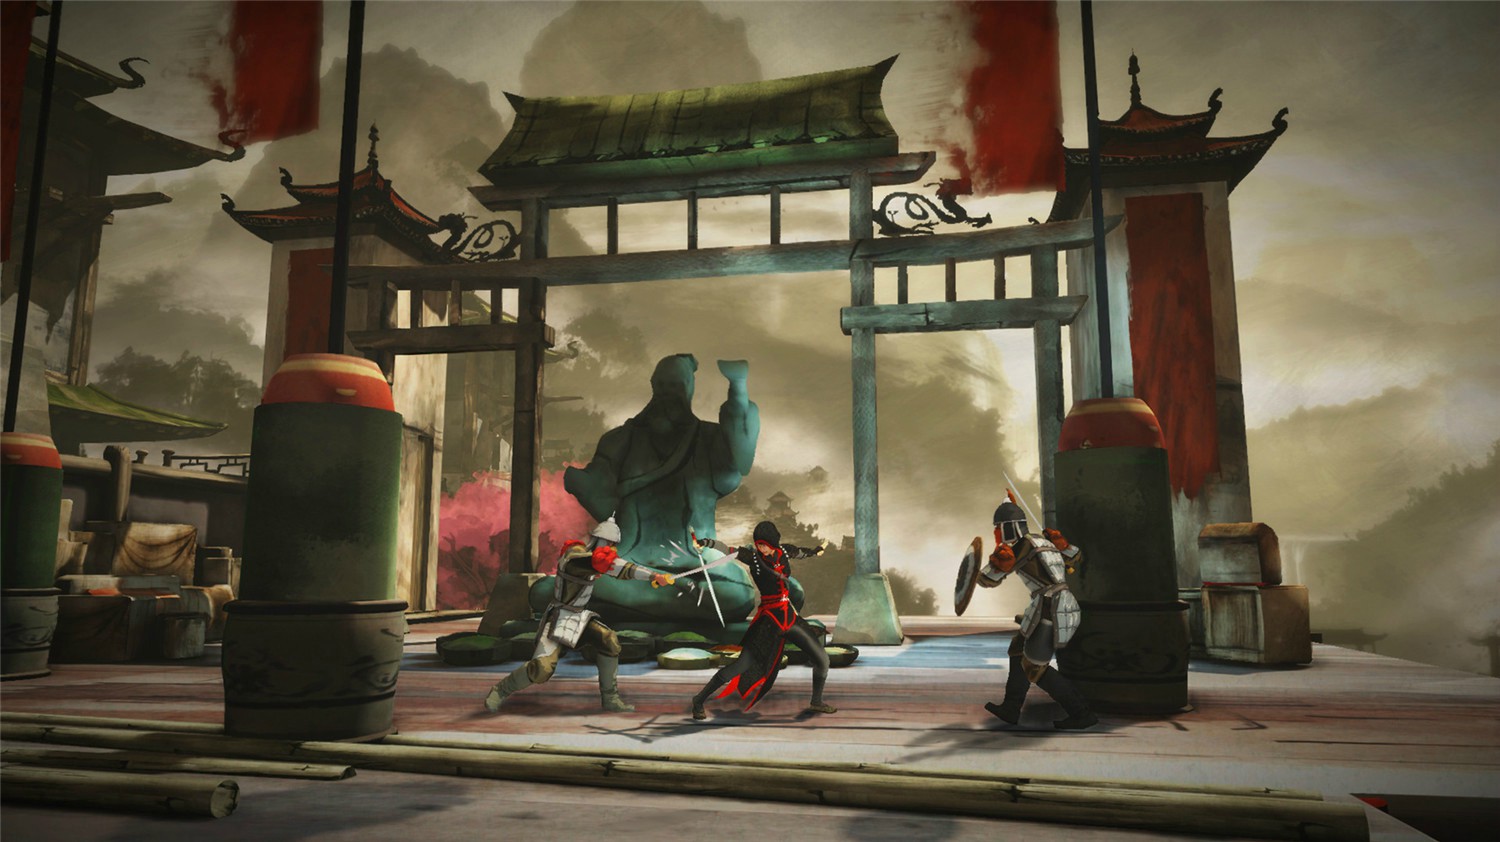 刺客信条编年史：中国/Assassin’s Creed Chronicles: China